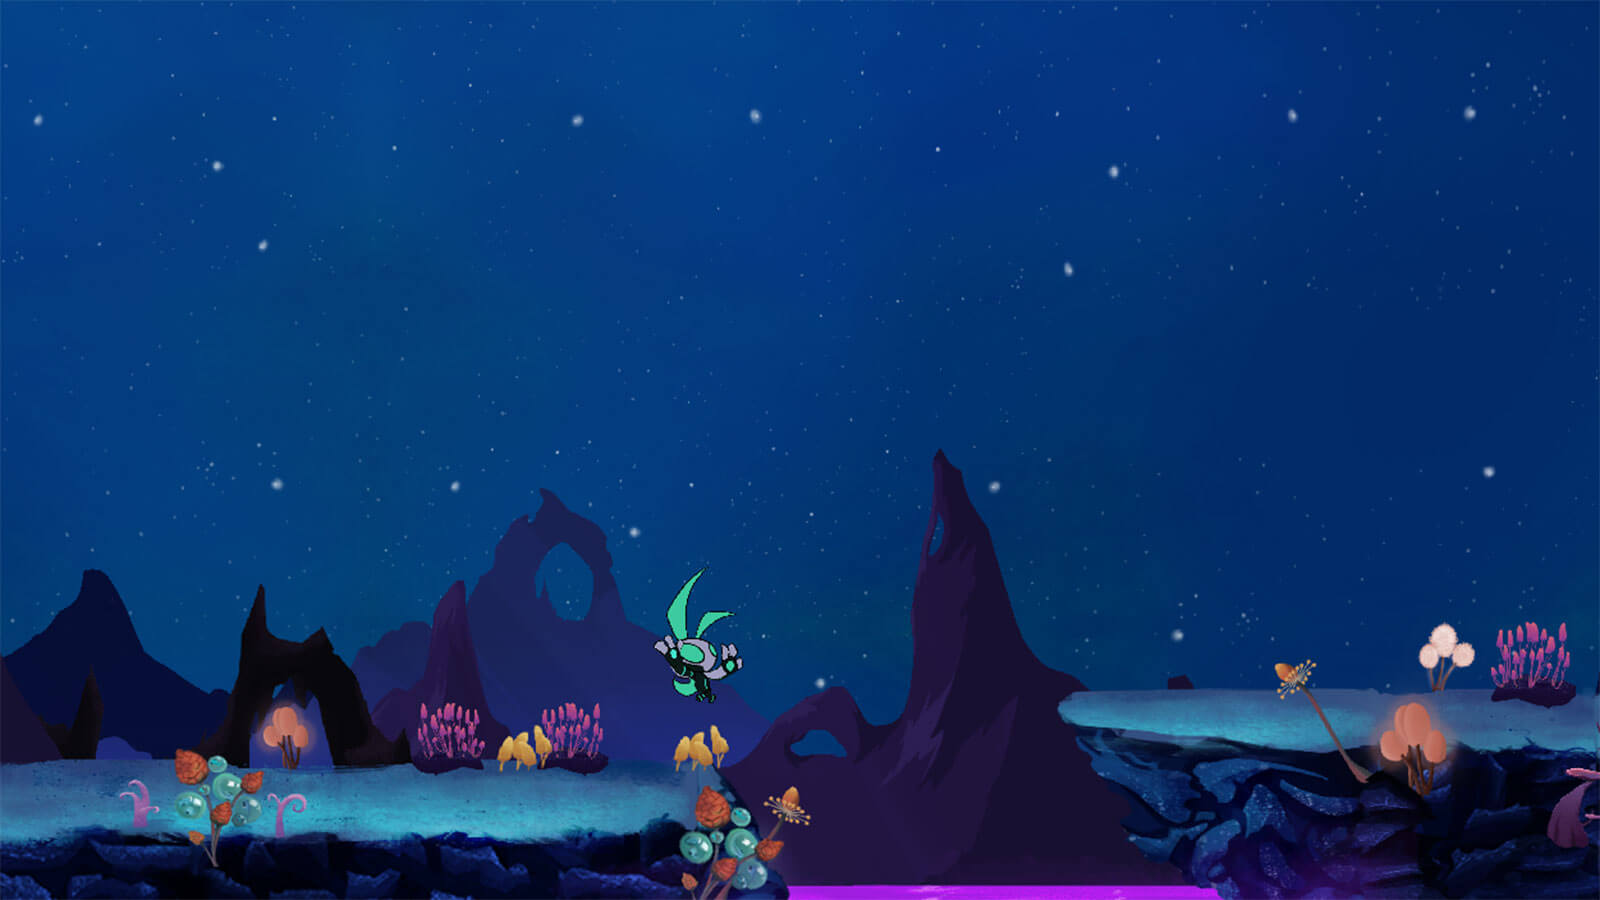 El jugador salta a una plataforma rocosa sobre un área llena de líquido púrpura.